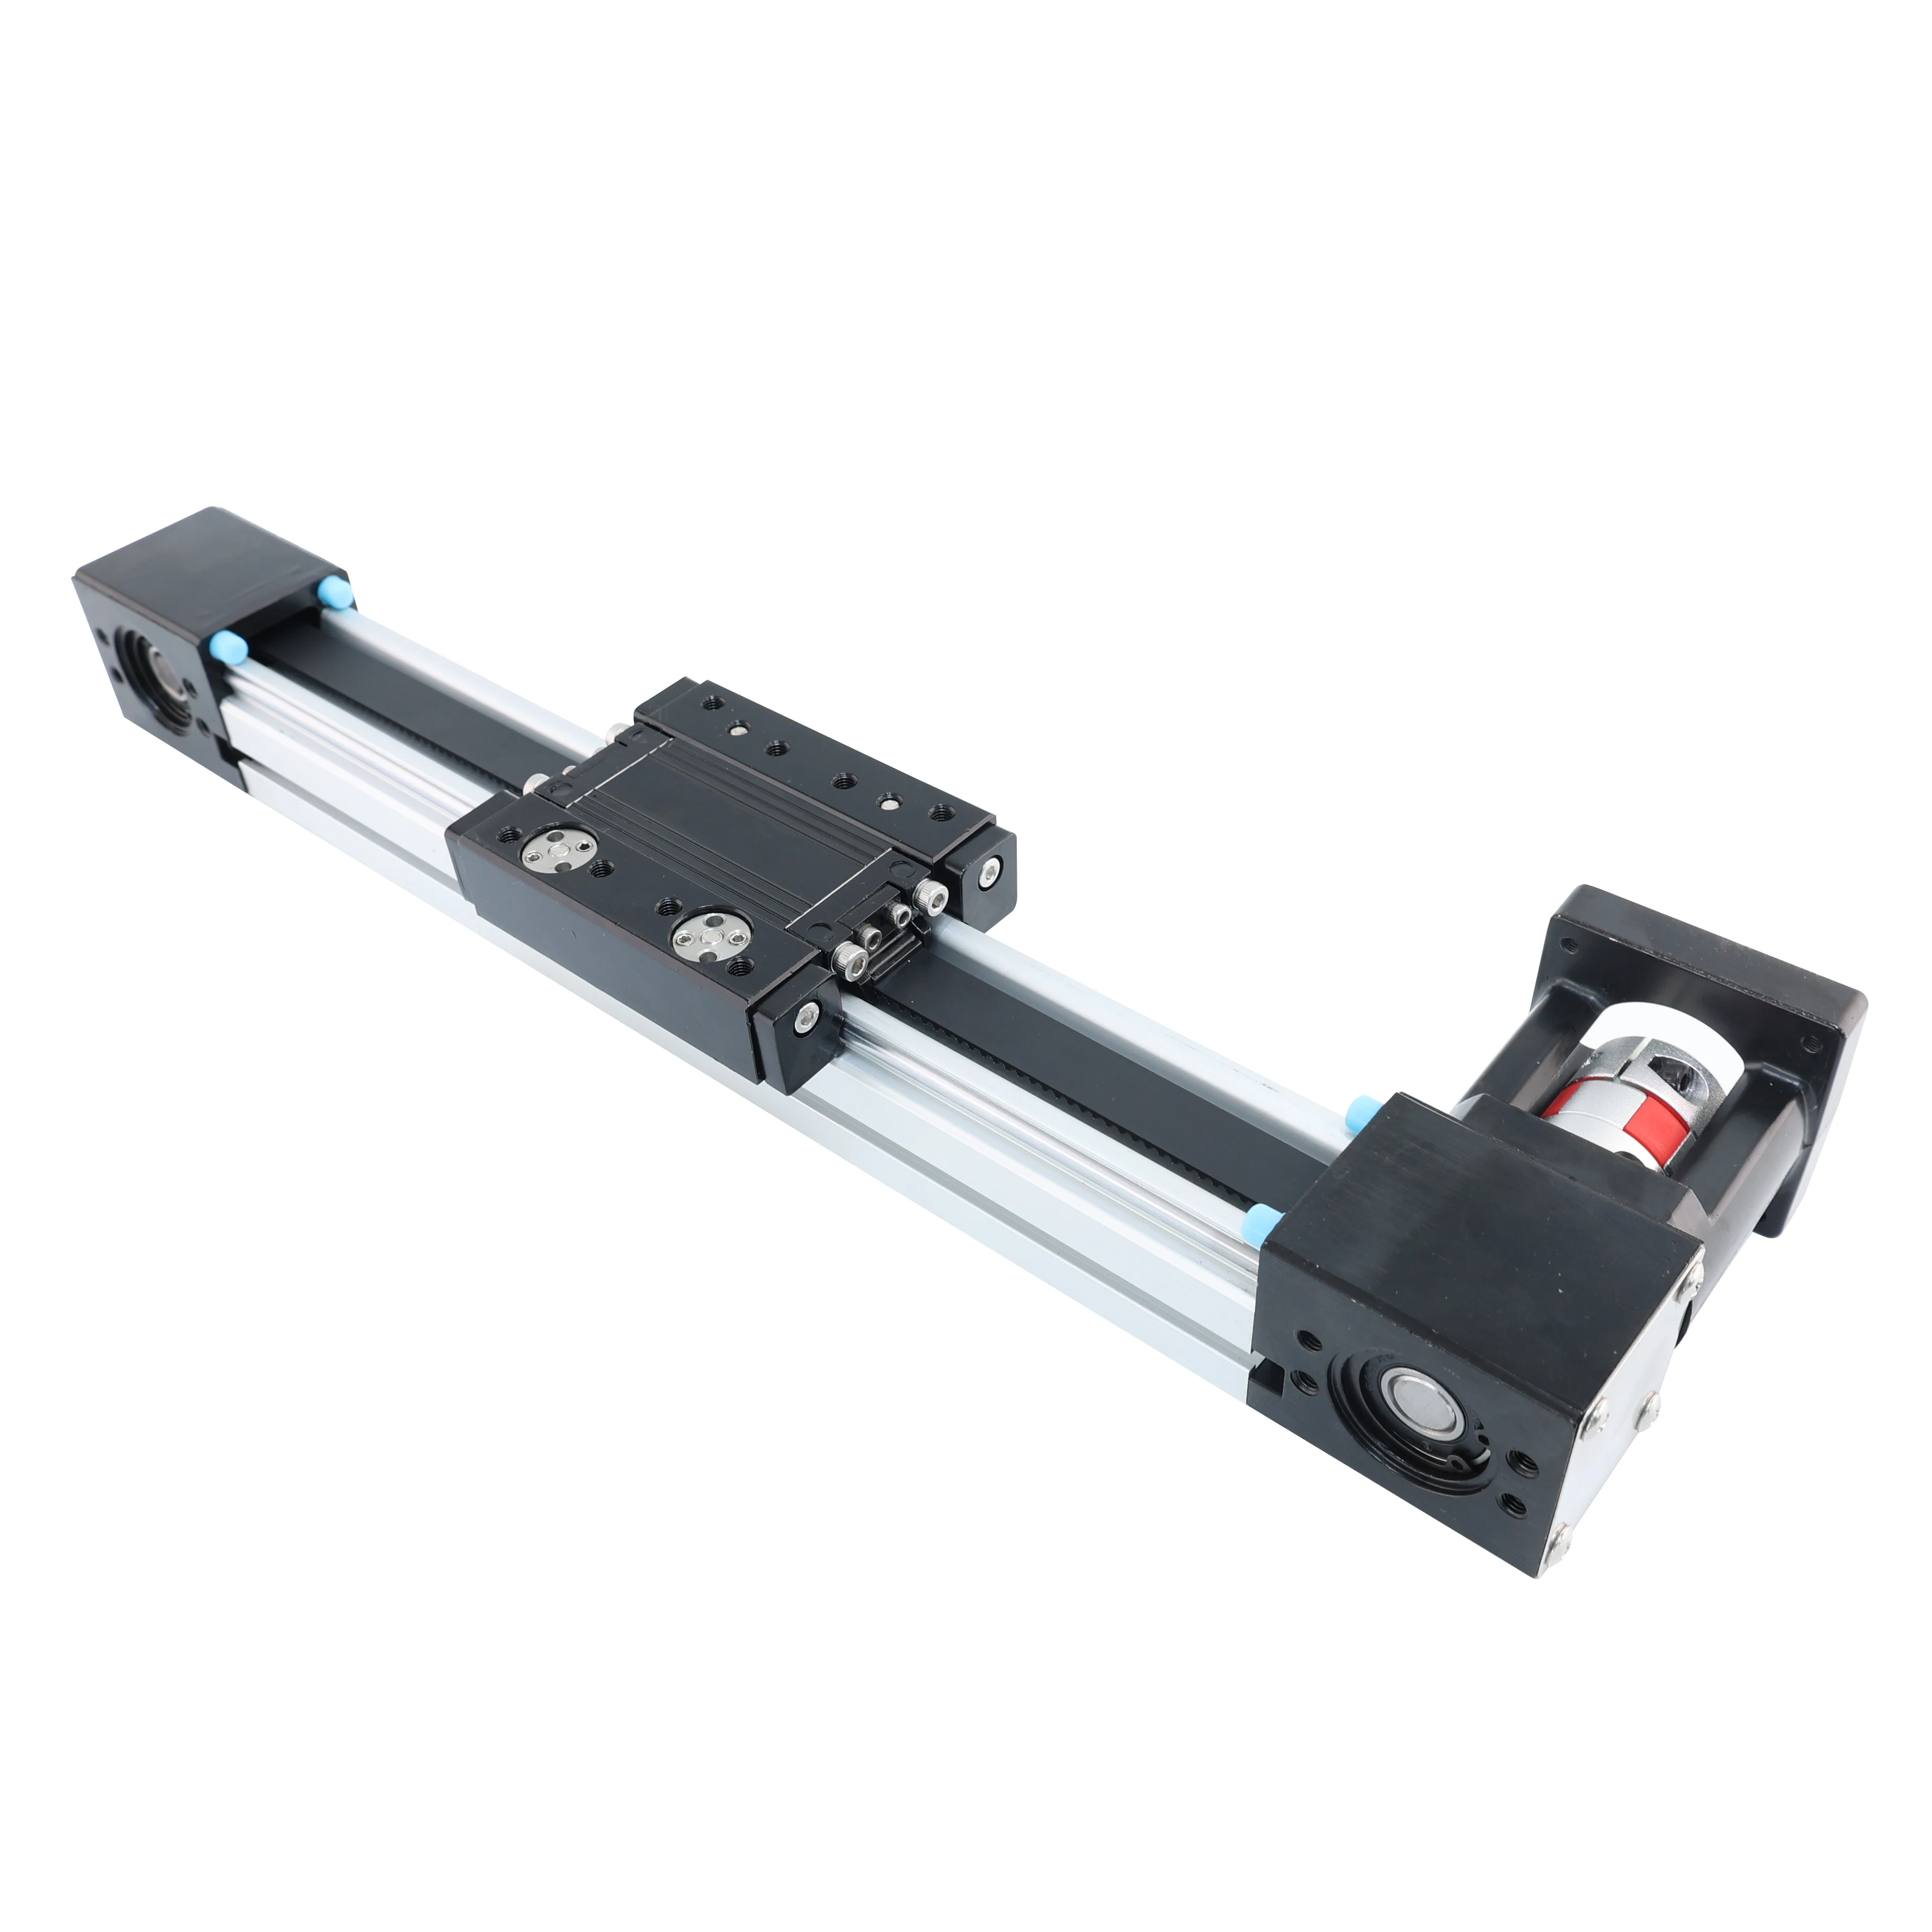 

Effective Travel Stroke Length 300mm HPVB45 Timing Belt Linear Slide Guide Motion Module slide cnc for 3D printer accessories